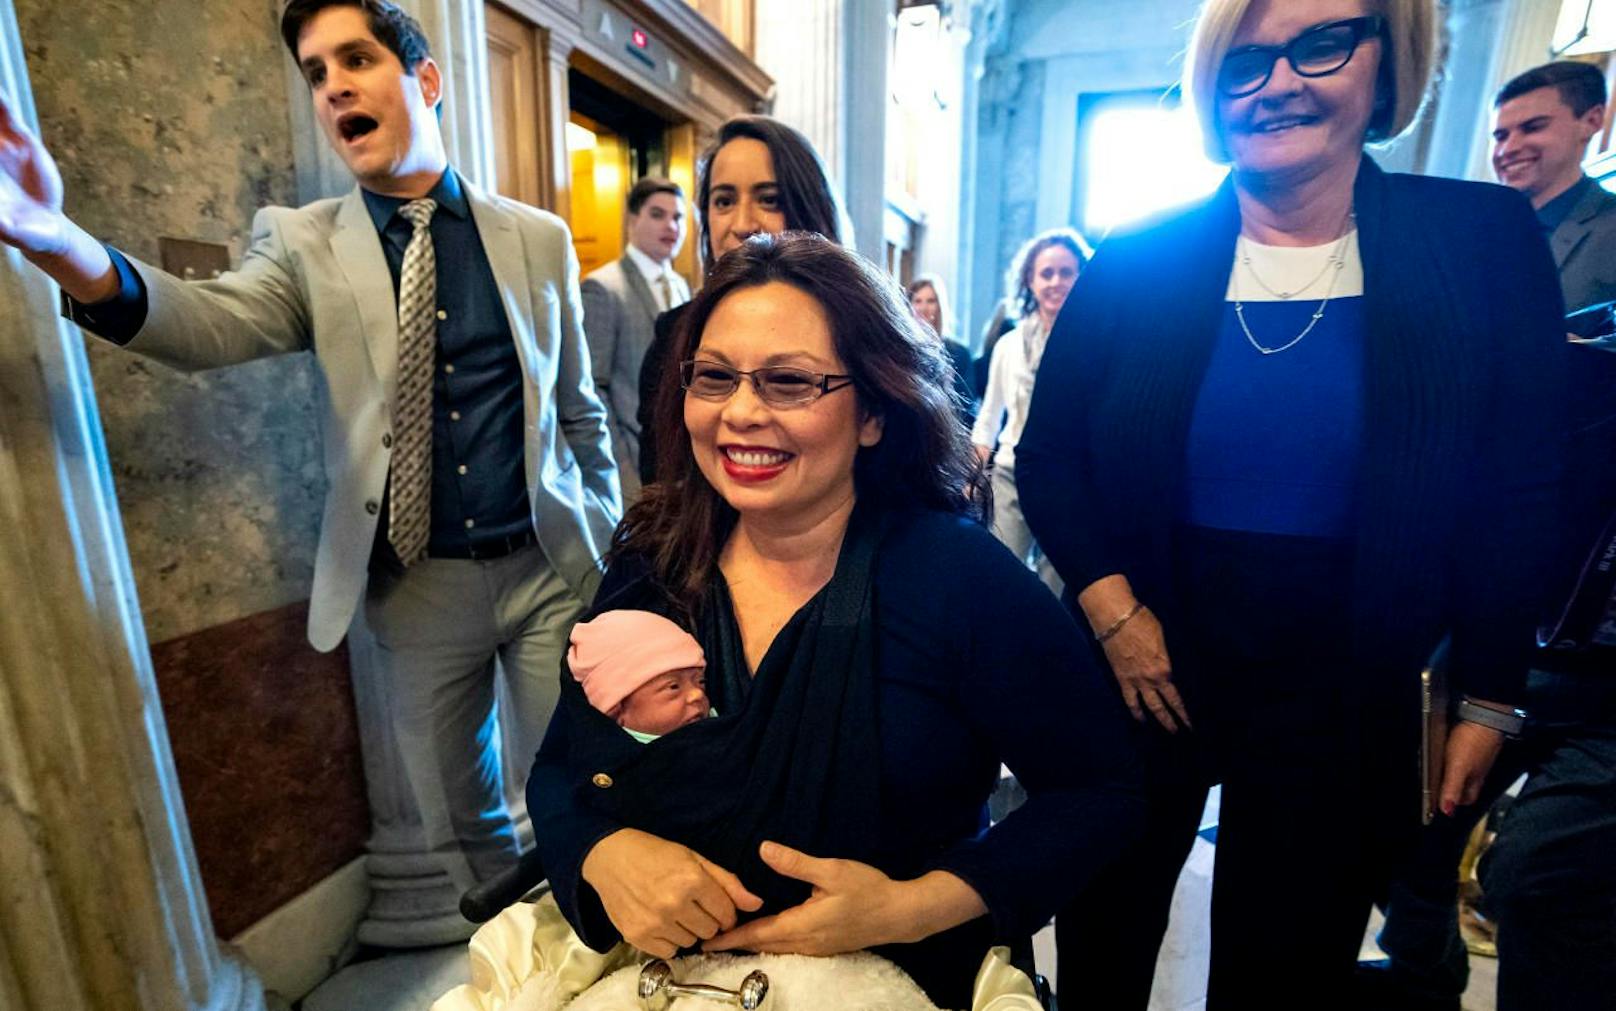 Premiere: Baby (10 Tage) "stimmt" in US-Senat ab